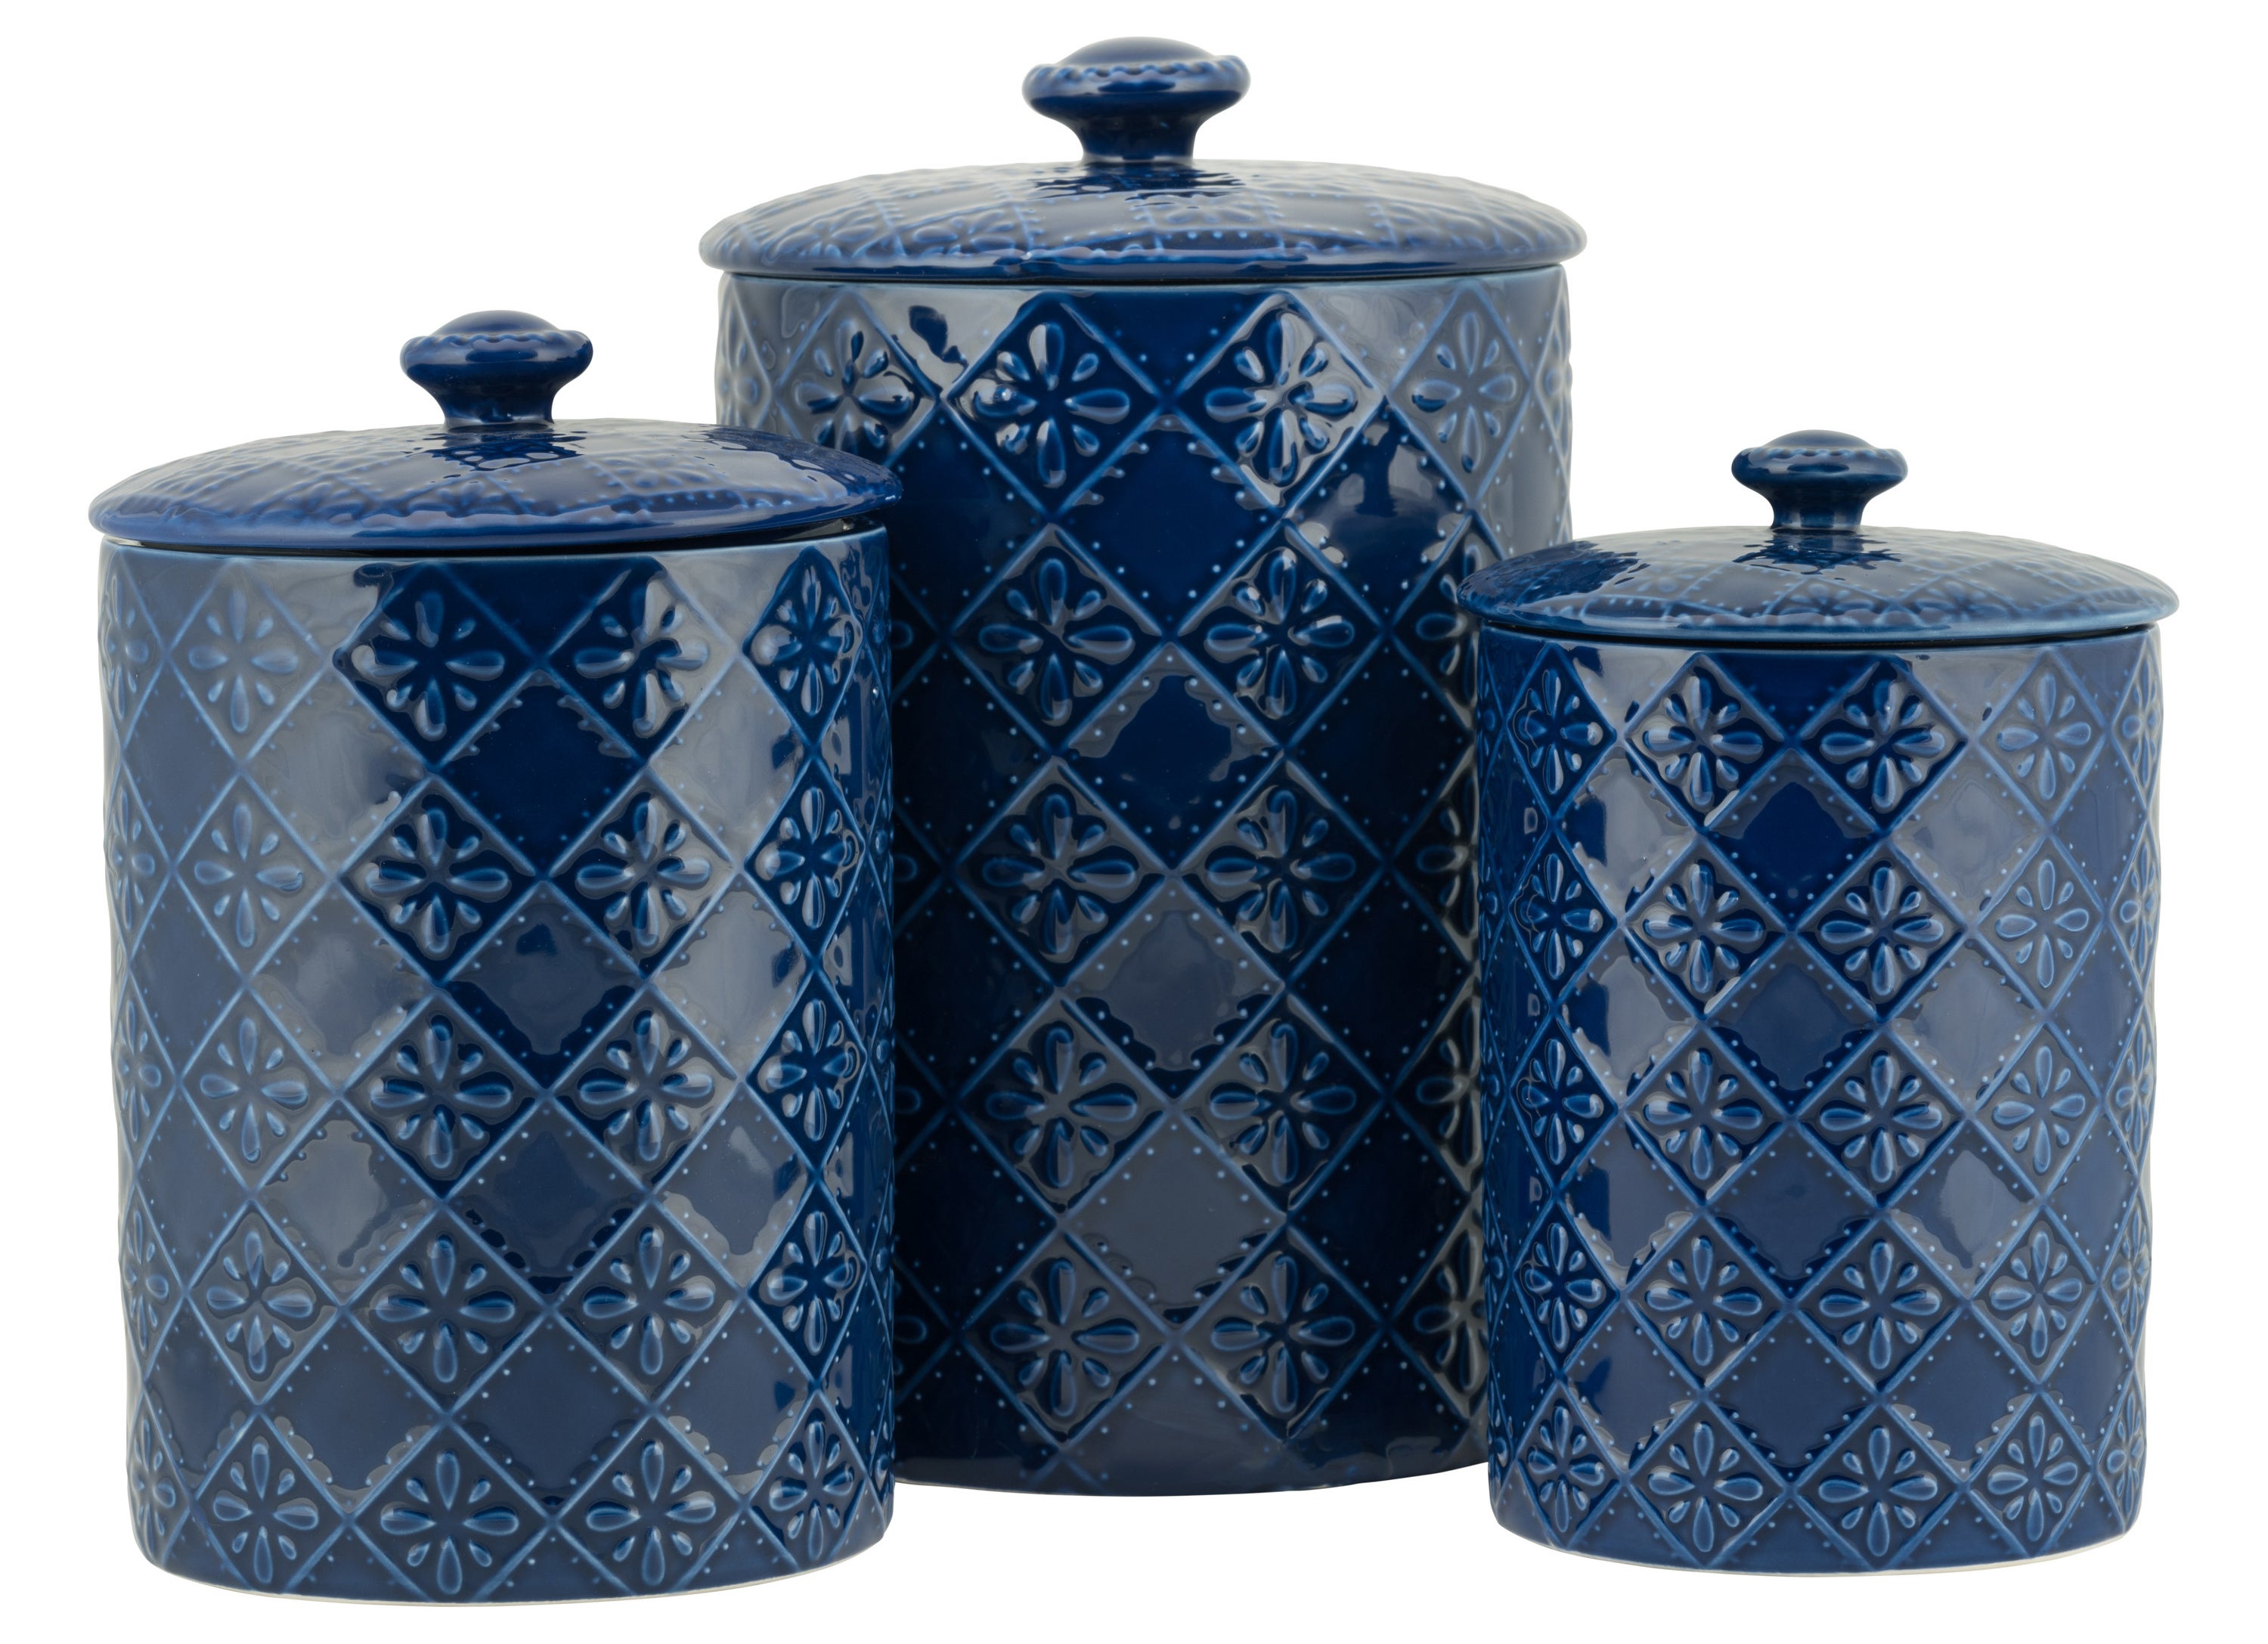 The three ceramic jars with floral design 